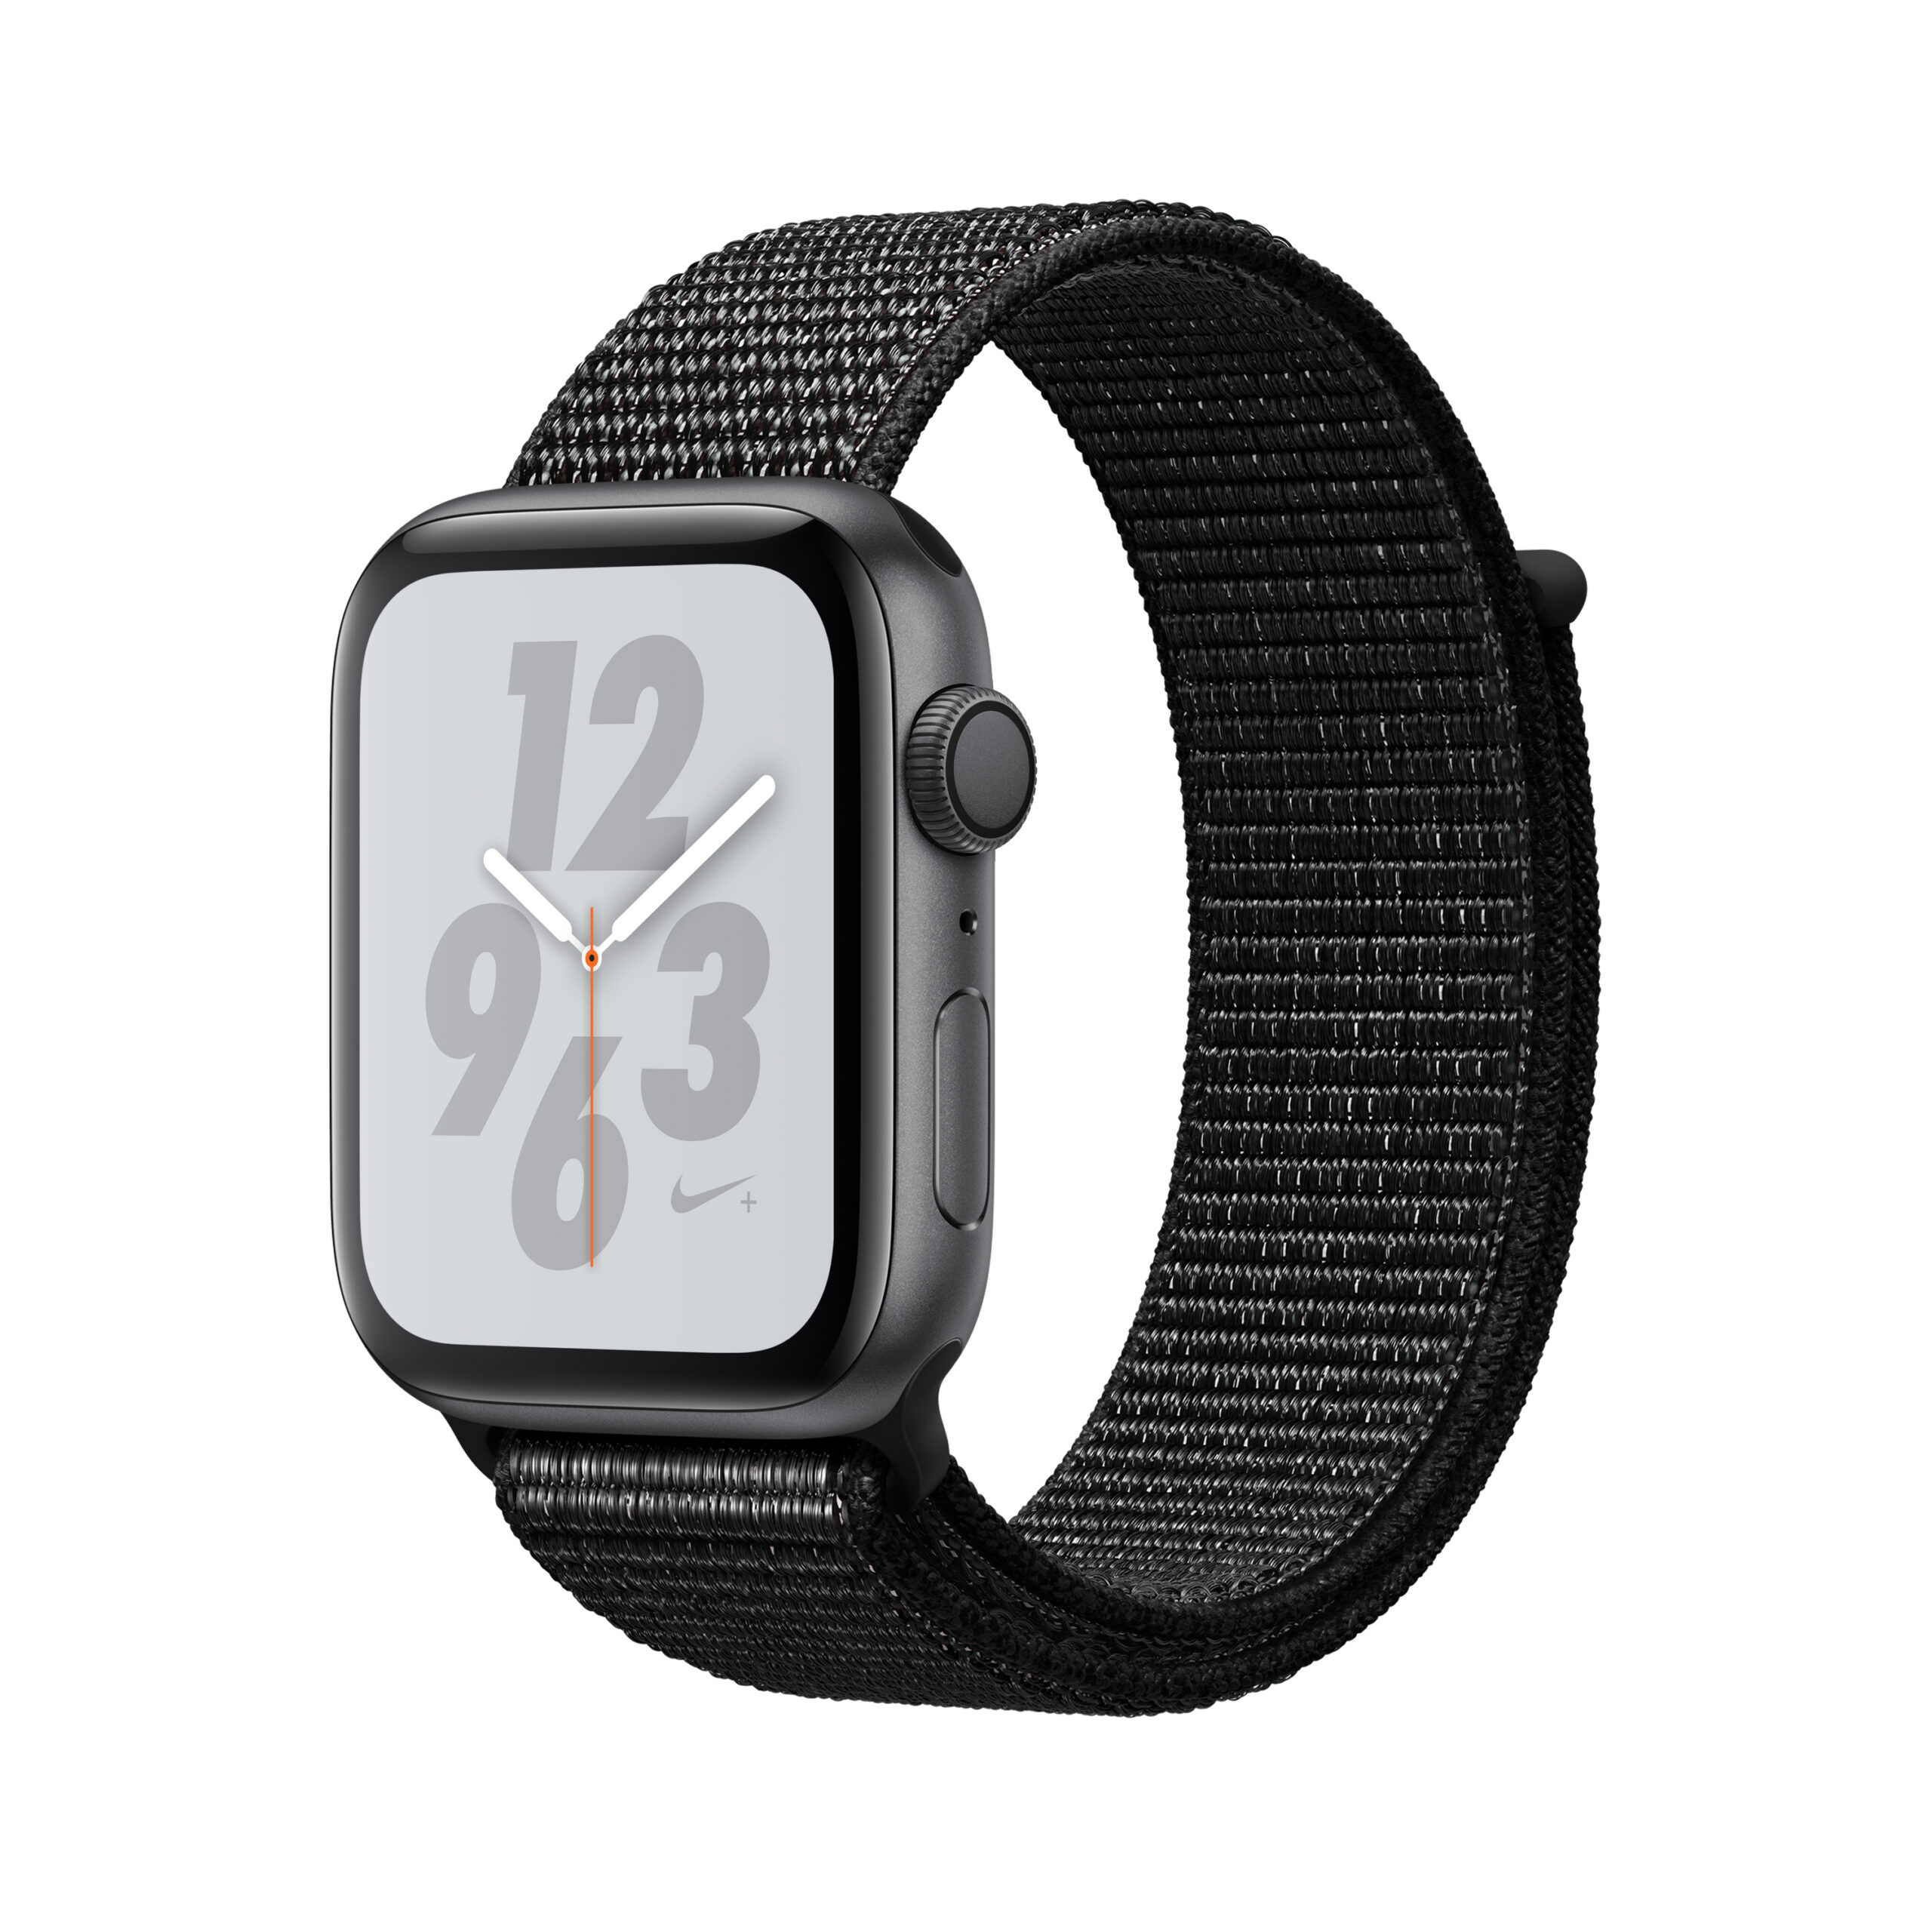 MU7J2LL/A - $266 - Apple Watch Nike + Series 4 GPS 44mm Space Gray Aluminum  Case With Black Sport Loop - MU7J2LL/A